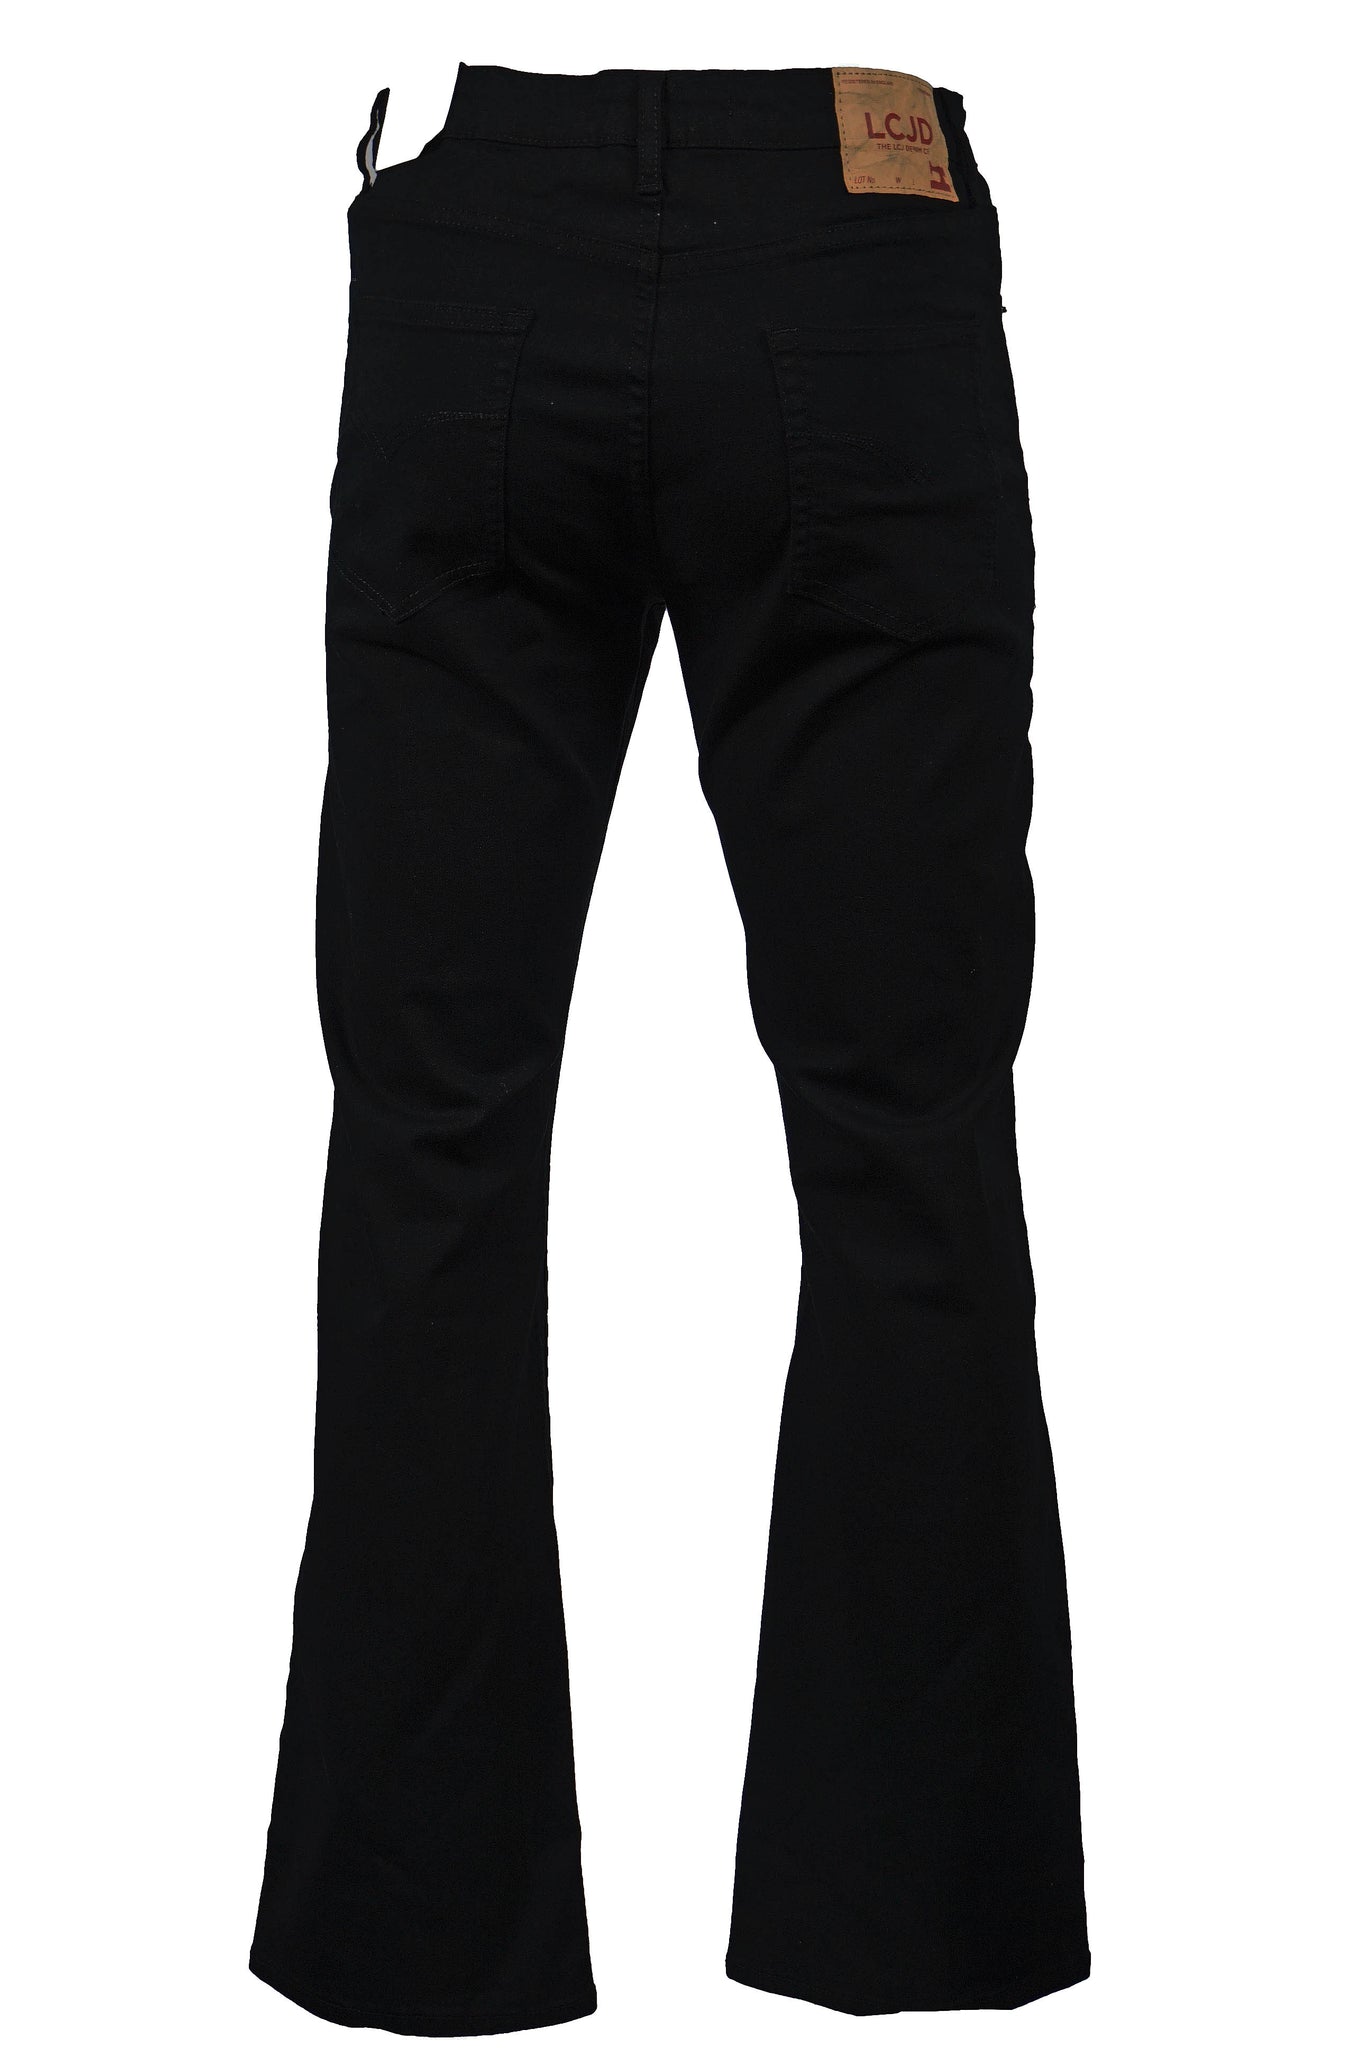 Black Jeans For Men: Black Denim Jeans For Men